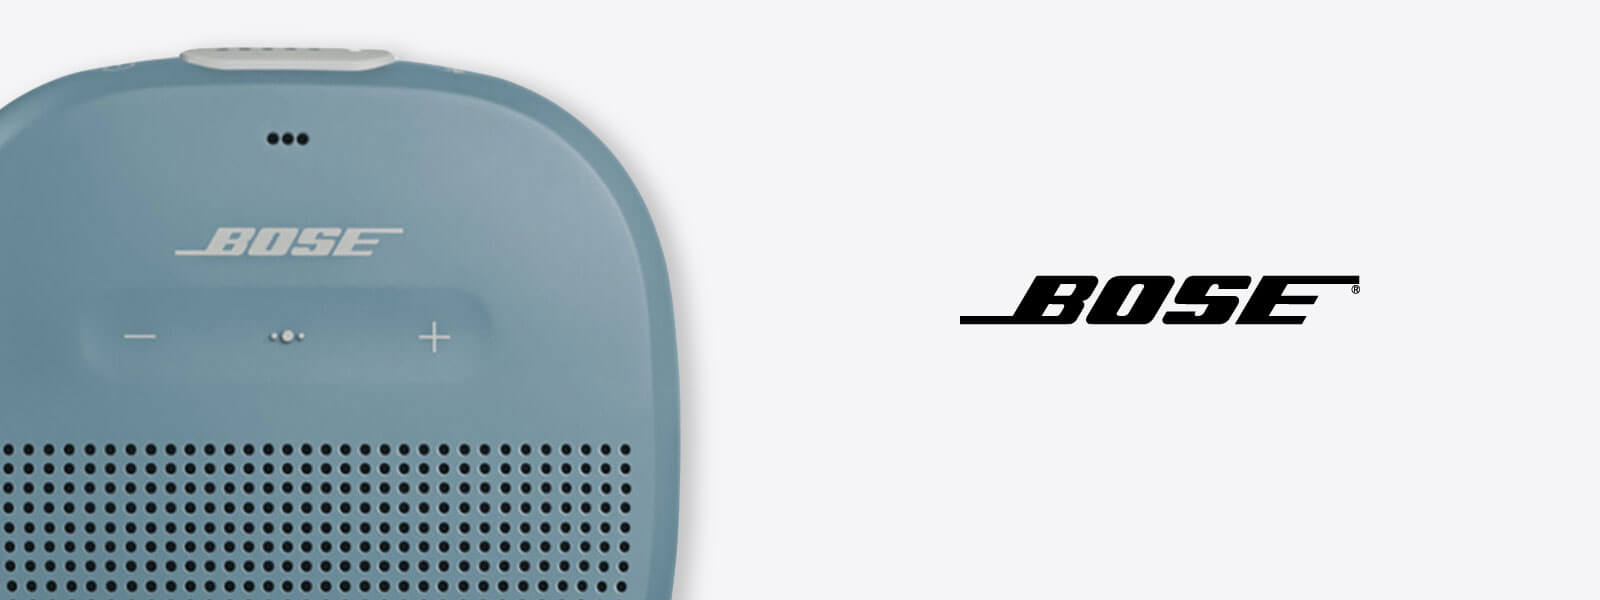 Bose Electronics. Bose Custom Color. Bose Portable Speakers. Personalized Bose Speaker.